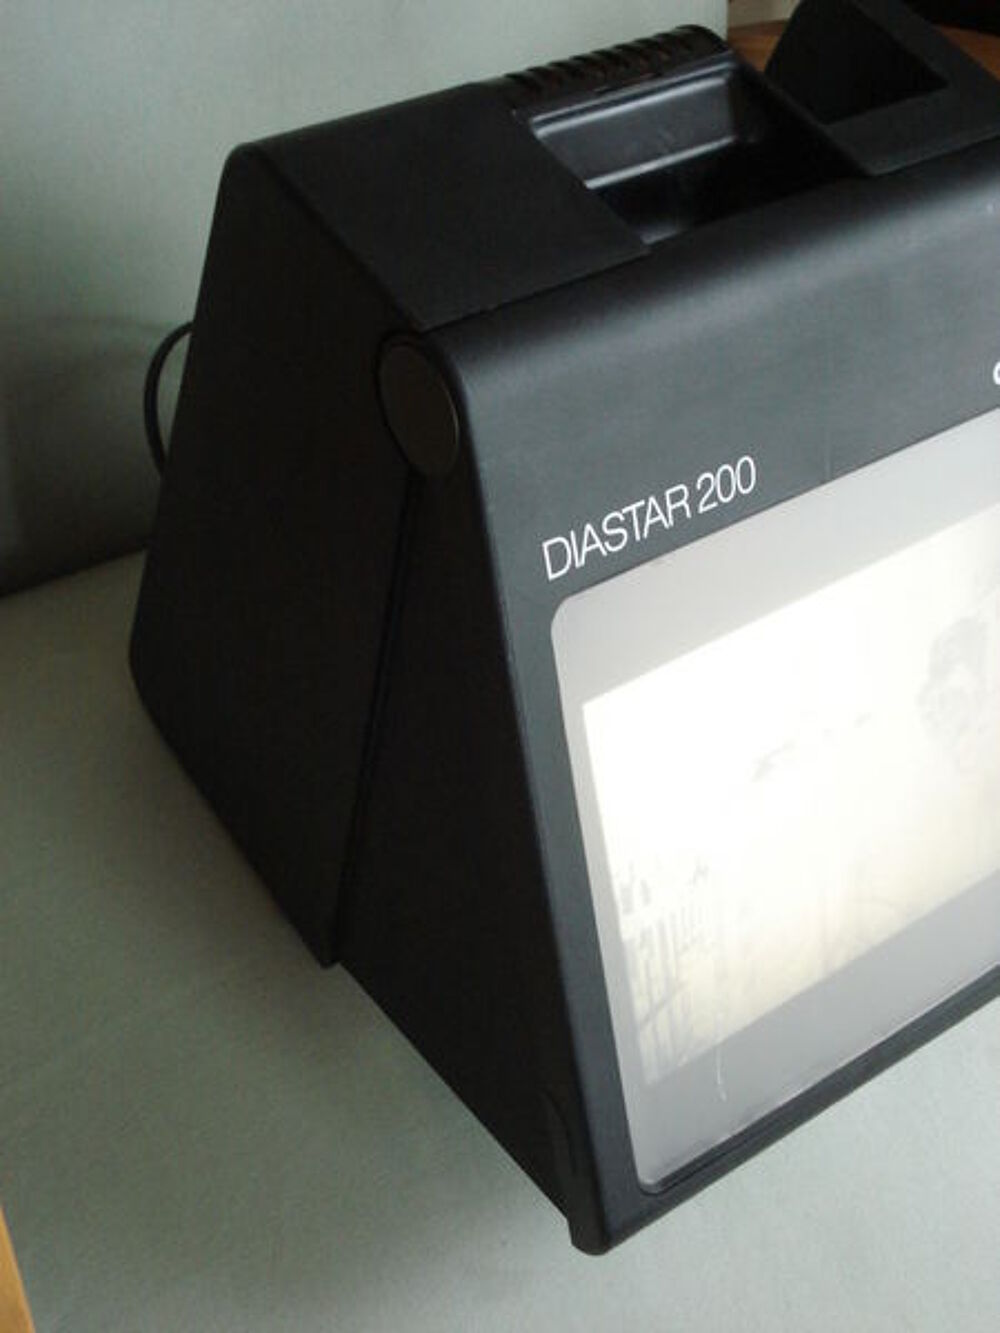 Projecteur DIASTAR 200 OSRAM visionneuse de diapositives Photos/Video/TV